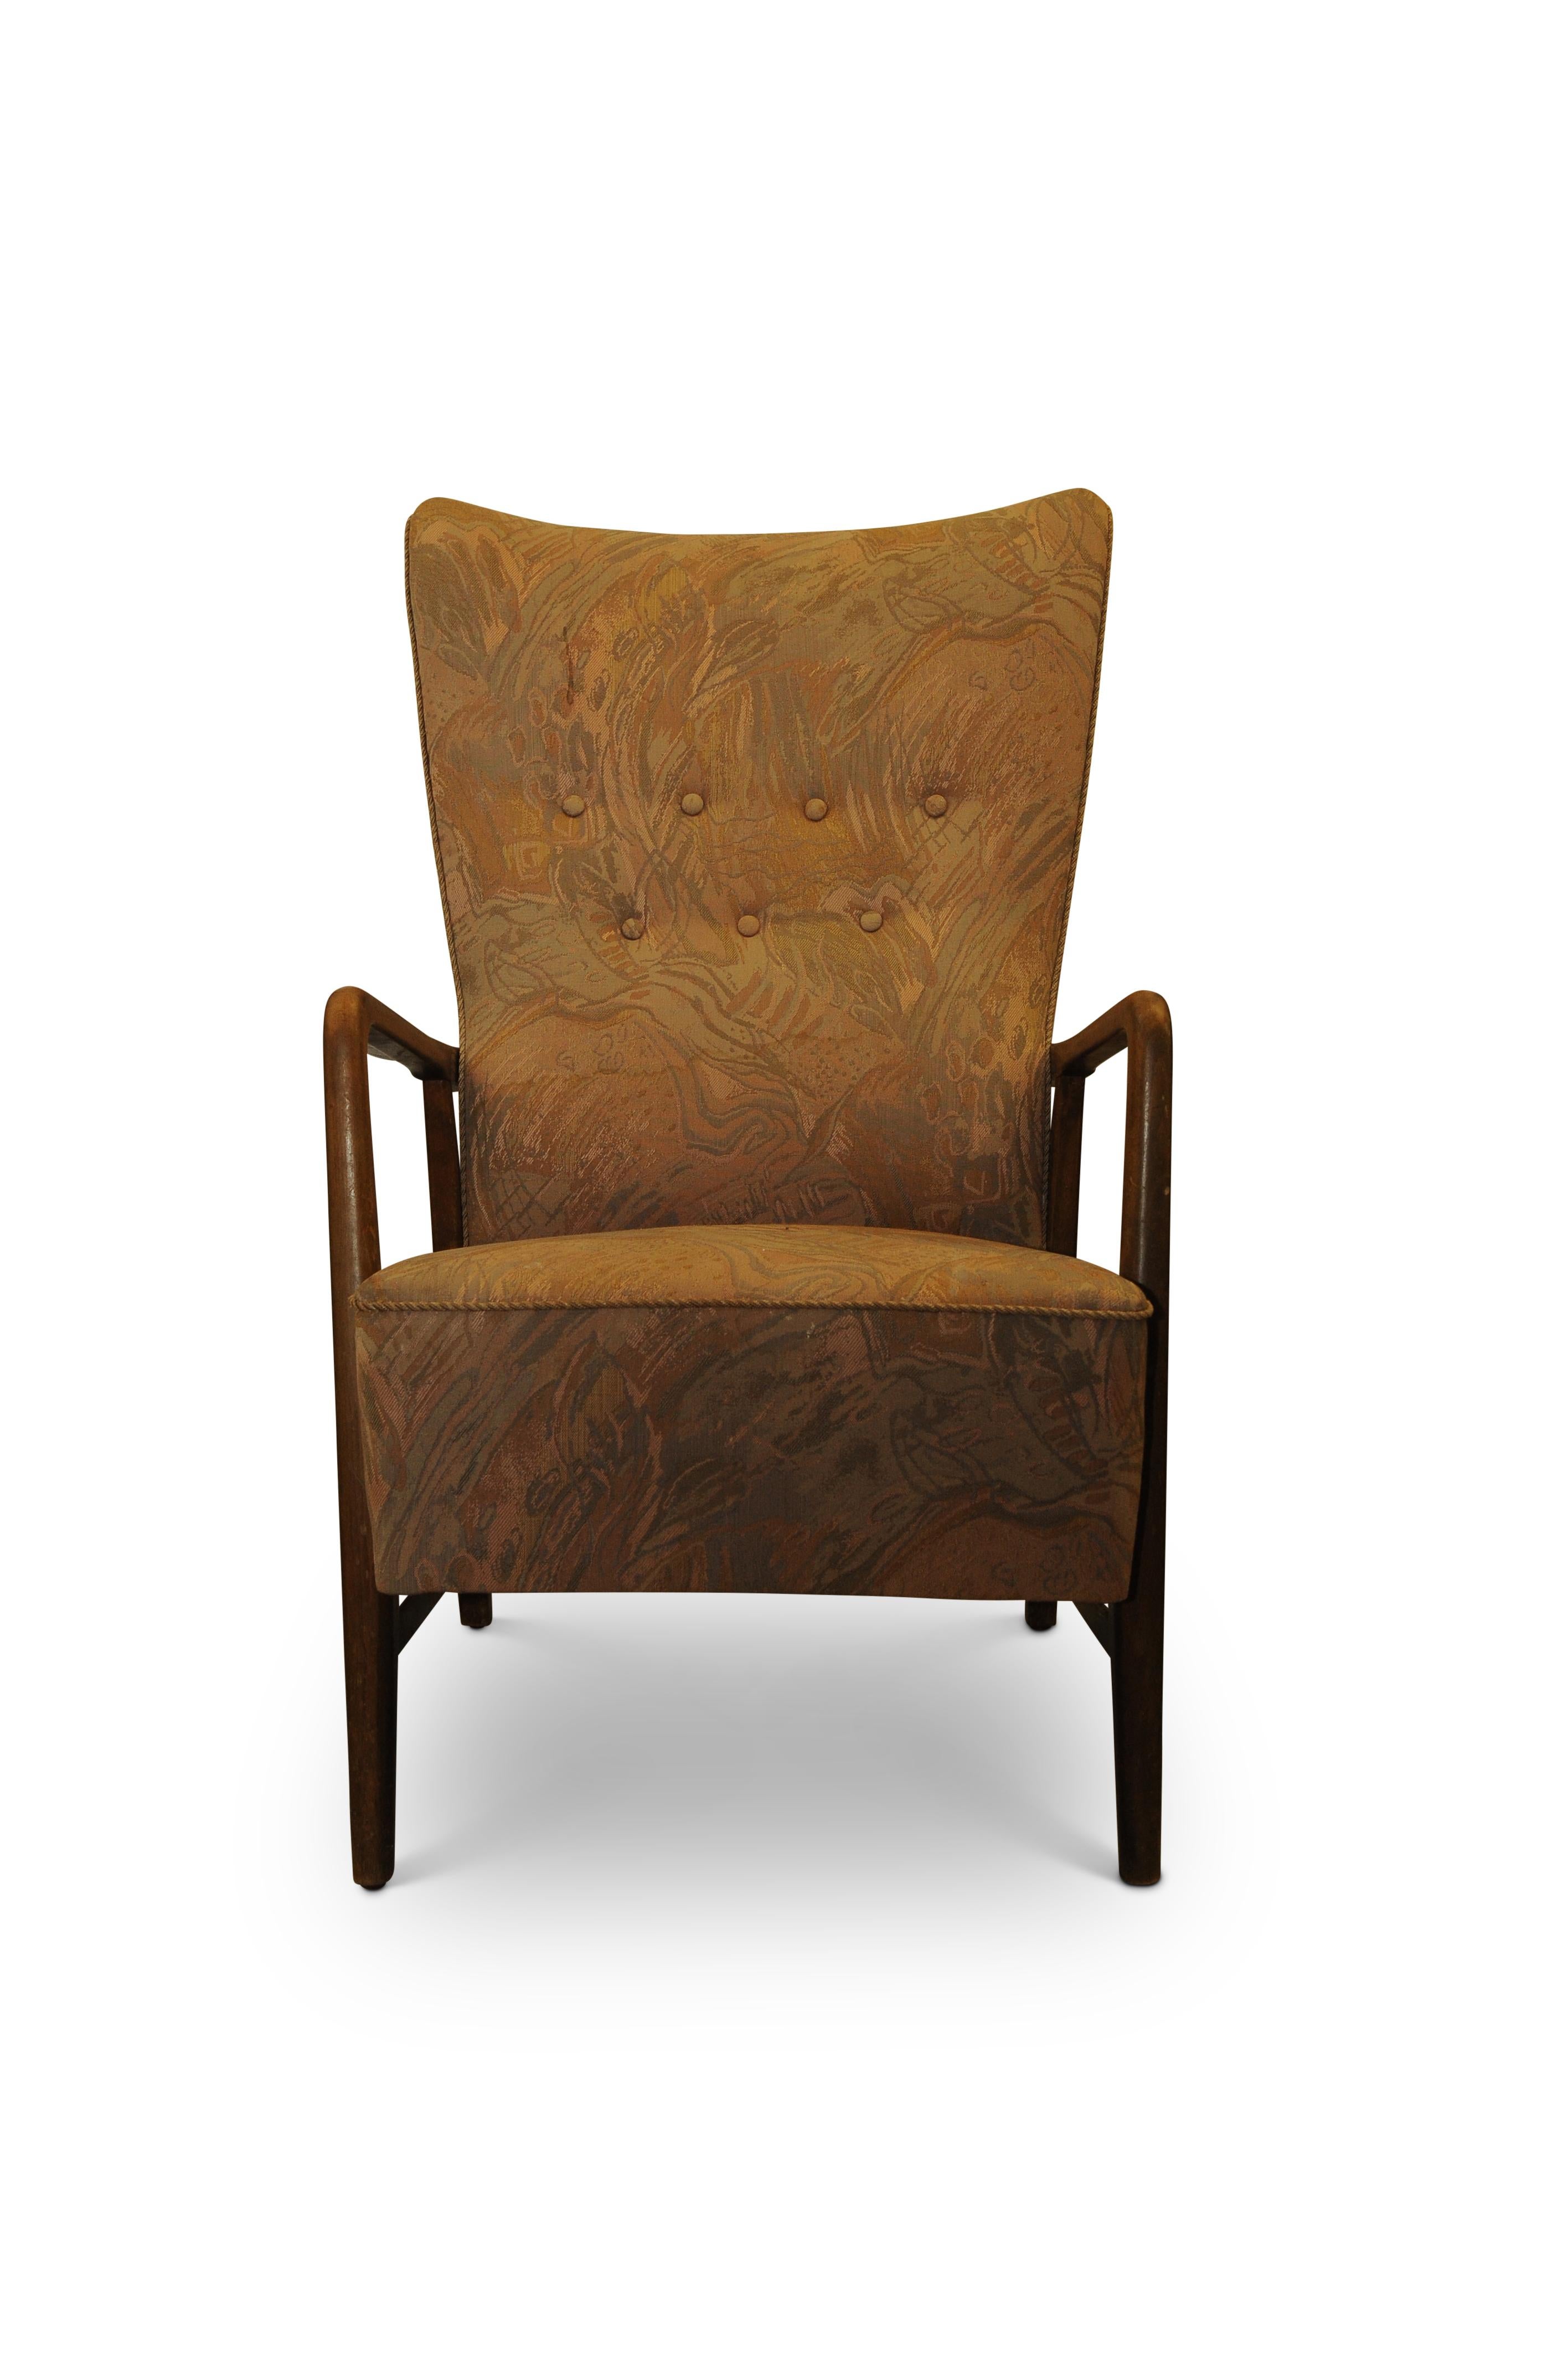 A Folke Ohlsson DUX Scandinavian Mid-Century Modern armchair patterned upholstery.
Elegant and timeless designed High backed Mid-Century Modern armchair by renowned designer Folke Ohlsson.